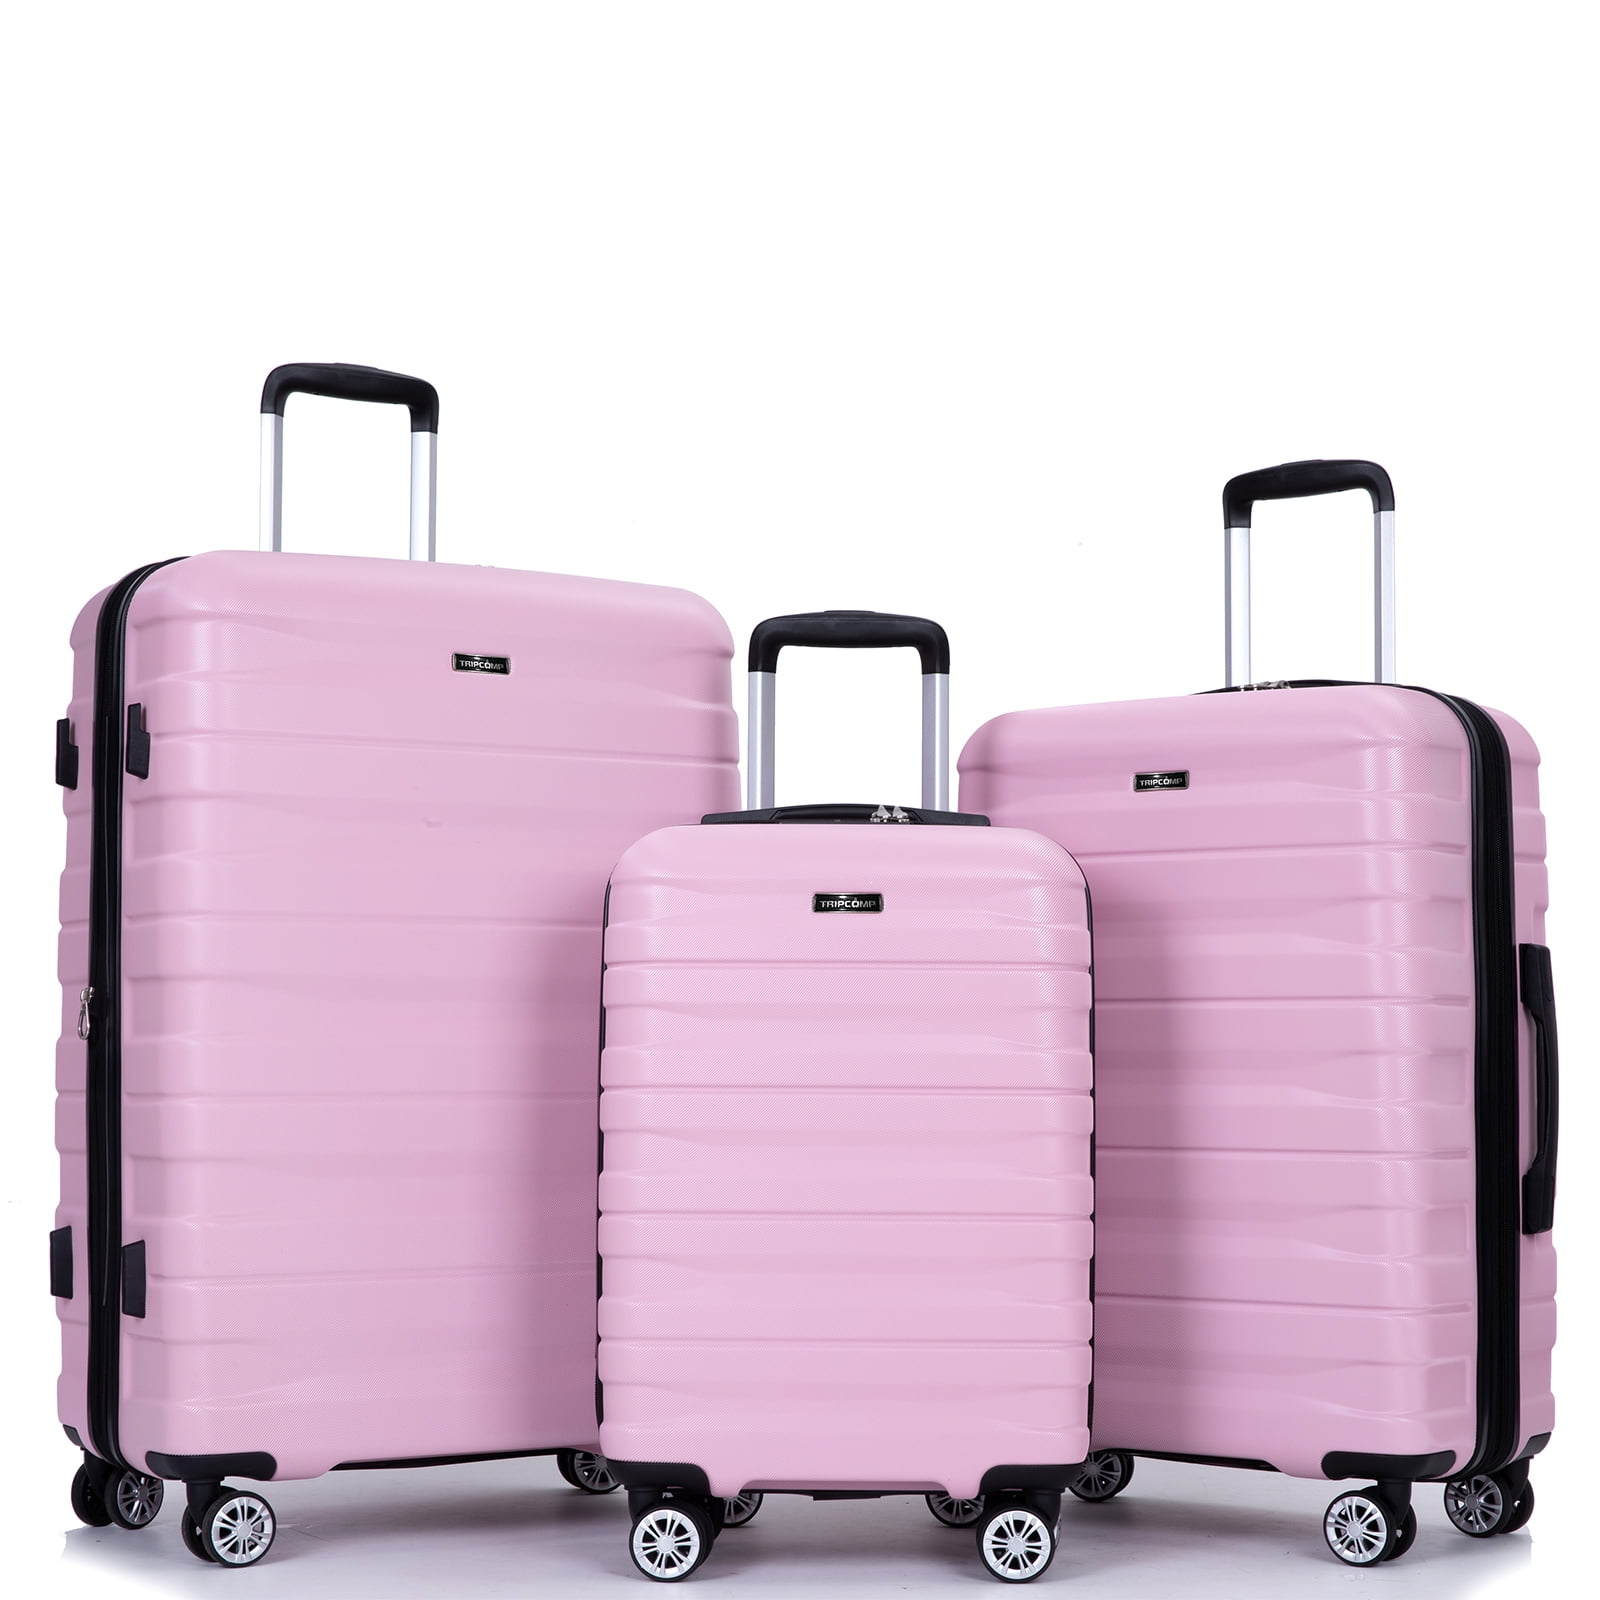 Tripcomp Hardside Luggage Set,Carry-on,Lightweight Suitcase Set of ...